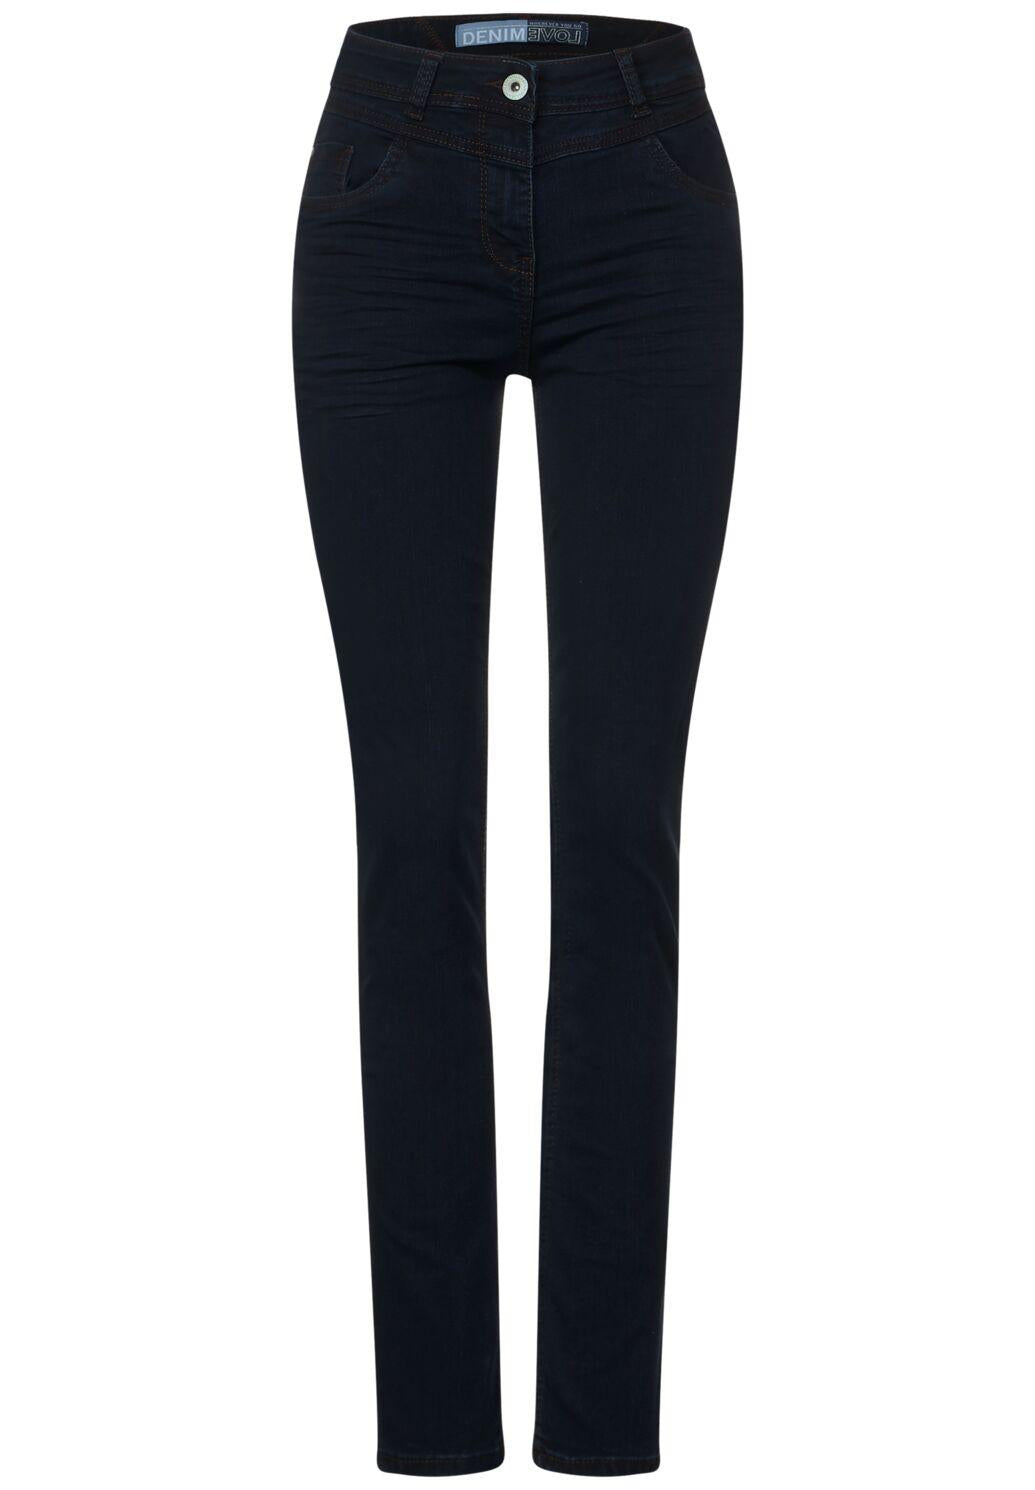 CECIL - Dunkle Jeans Hose im Style Toronto in blau schwarz B376495-14437